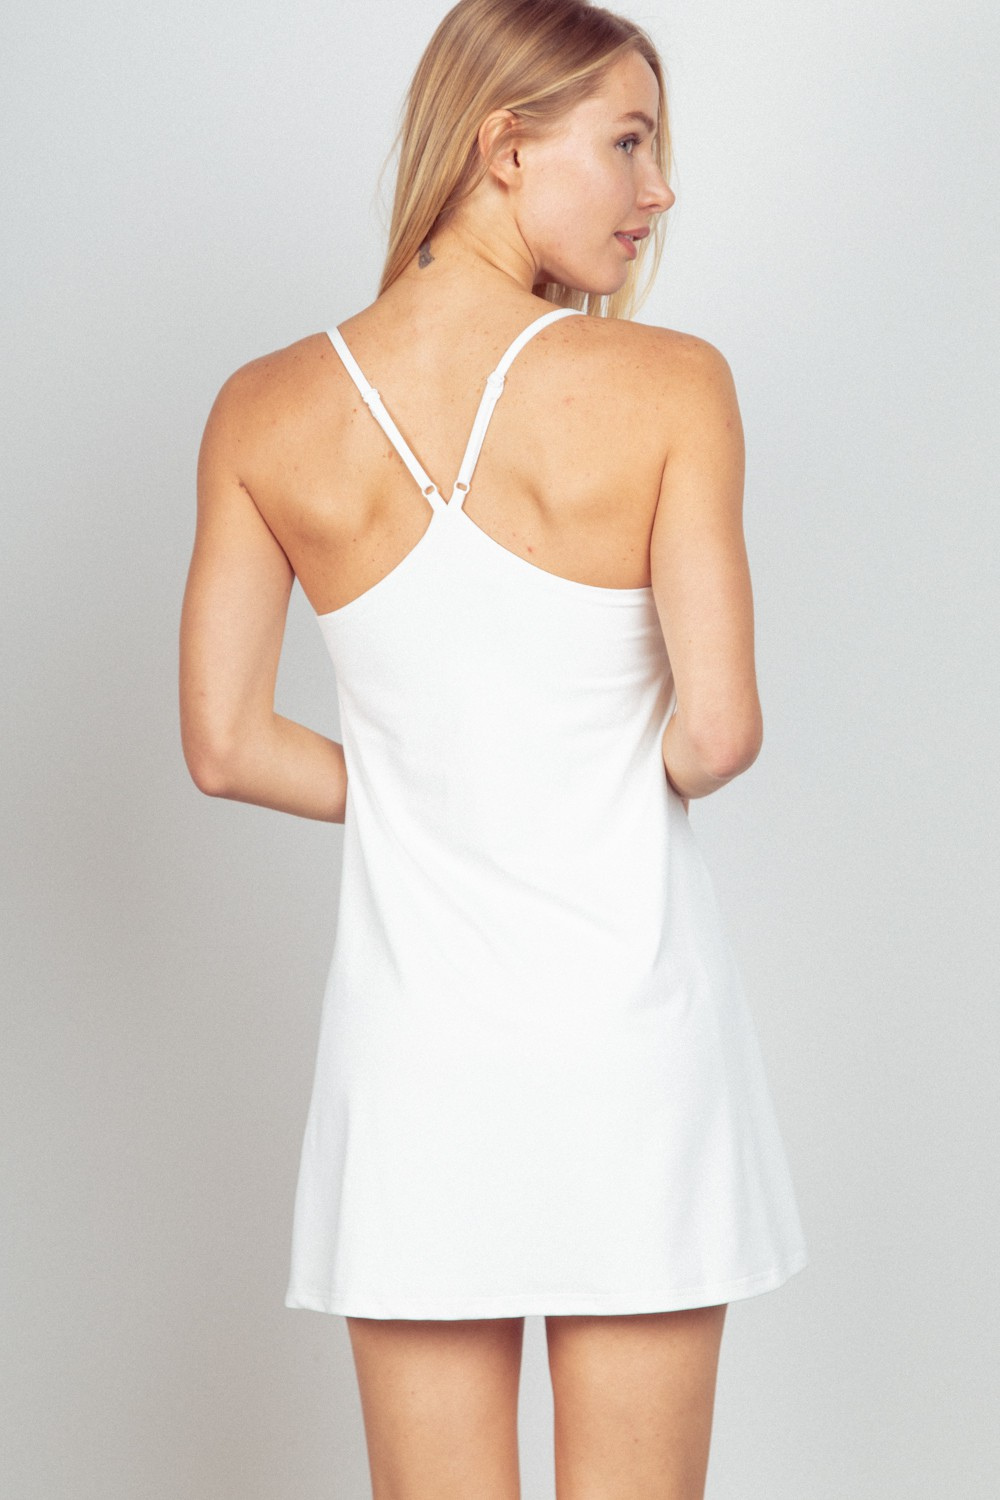 sleeveless tennis dress in white back view